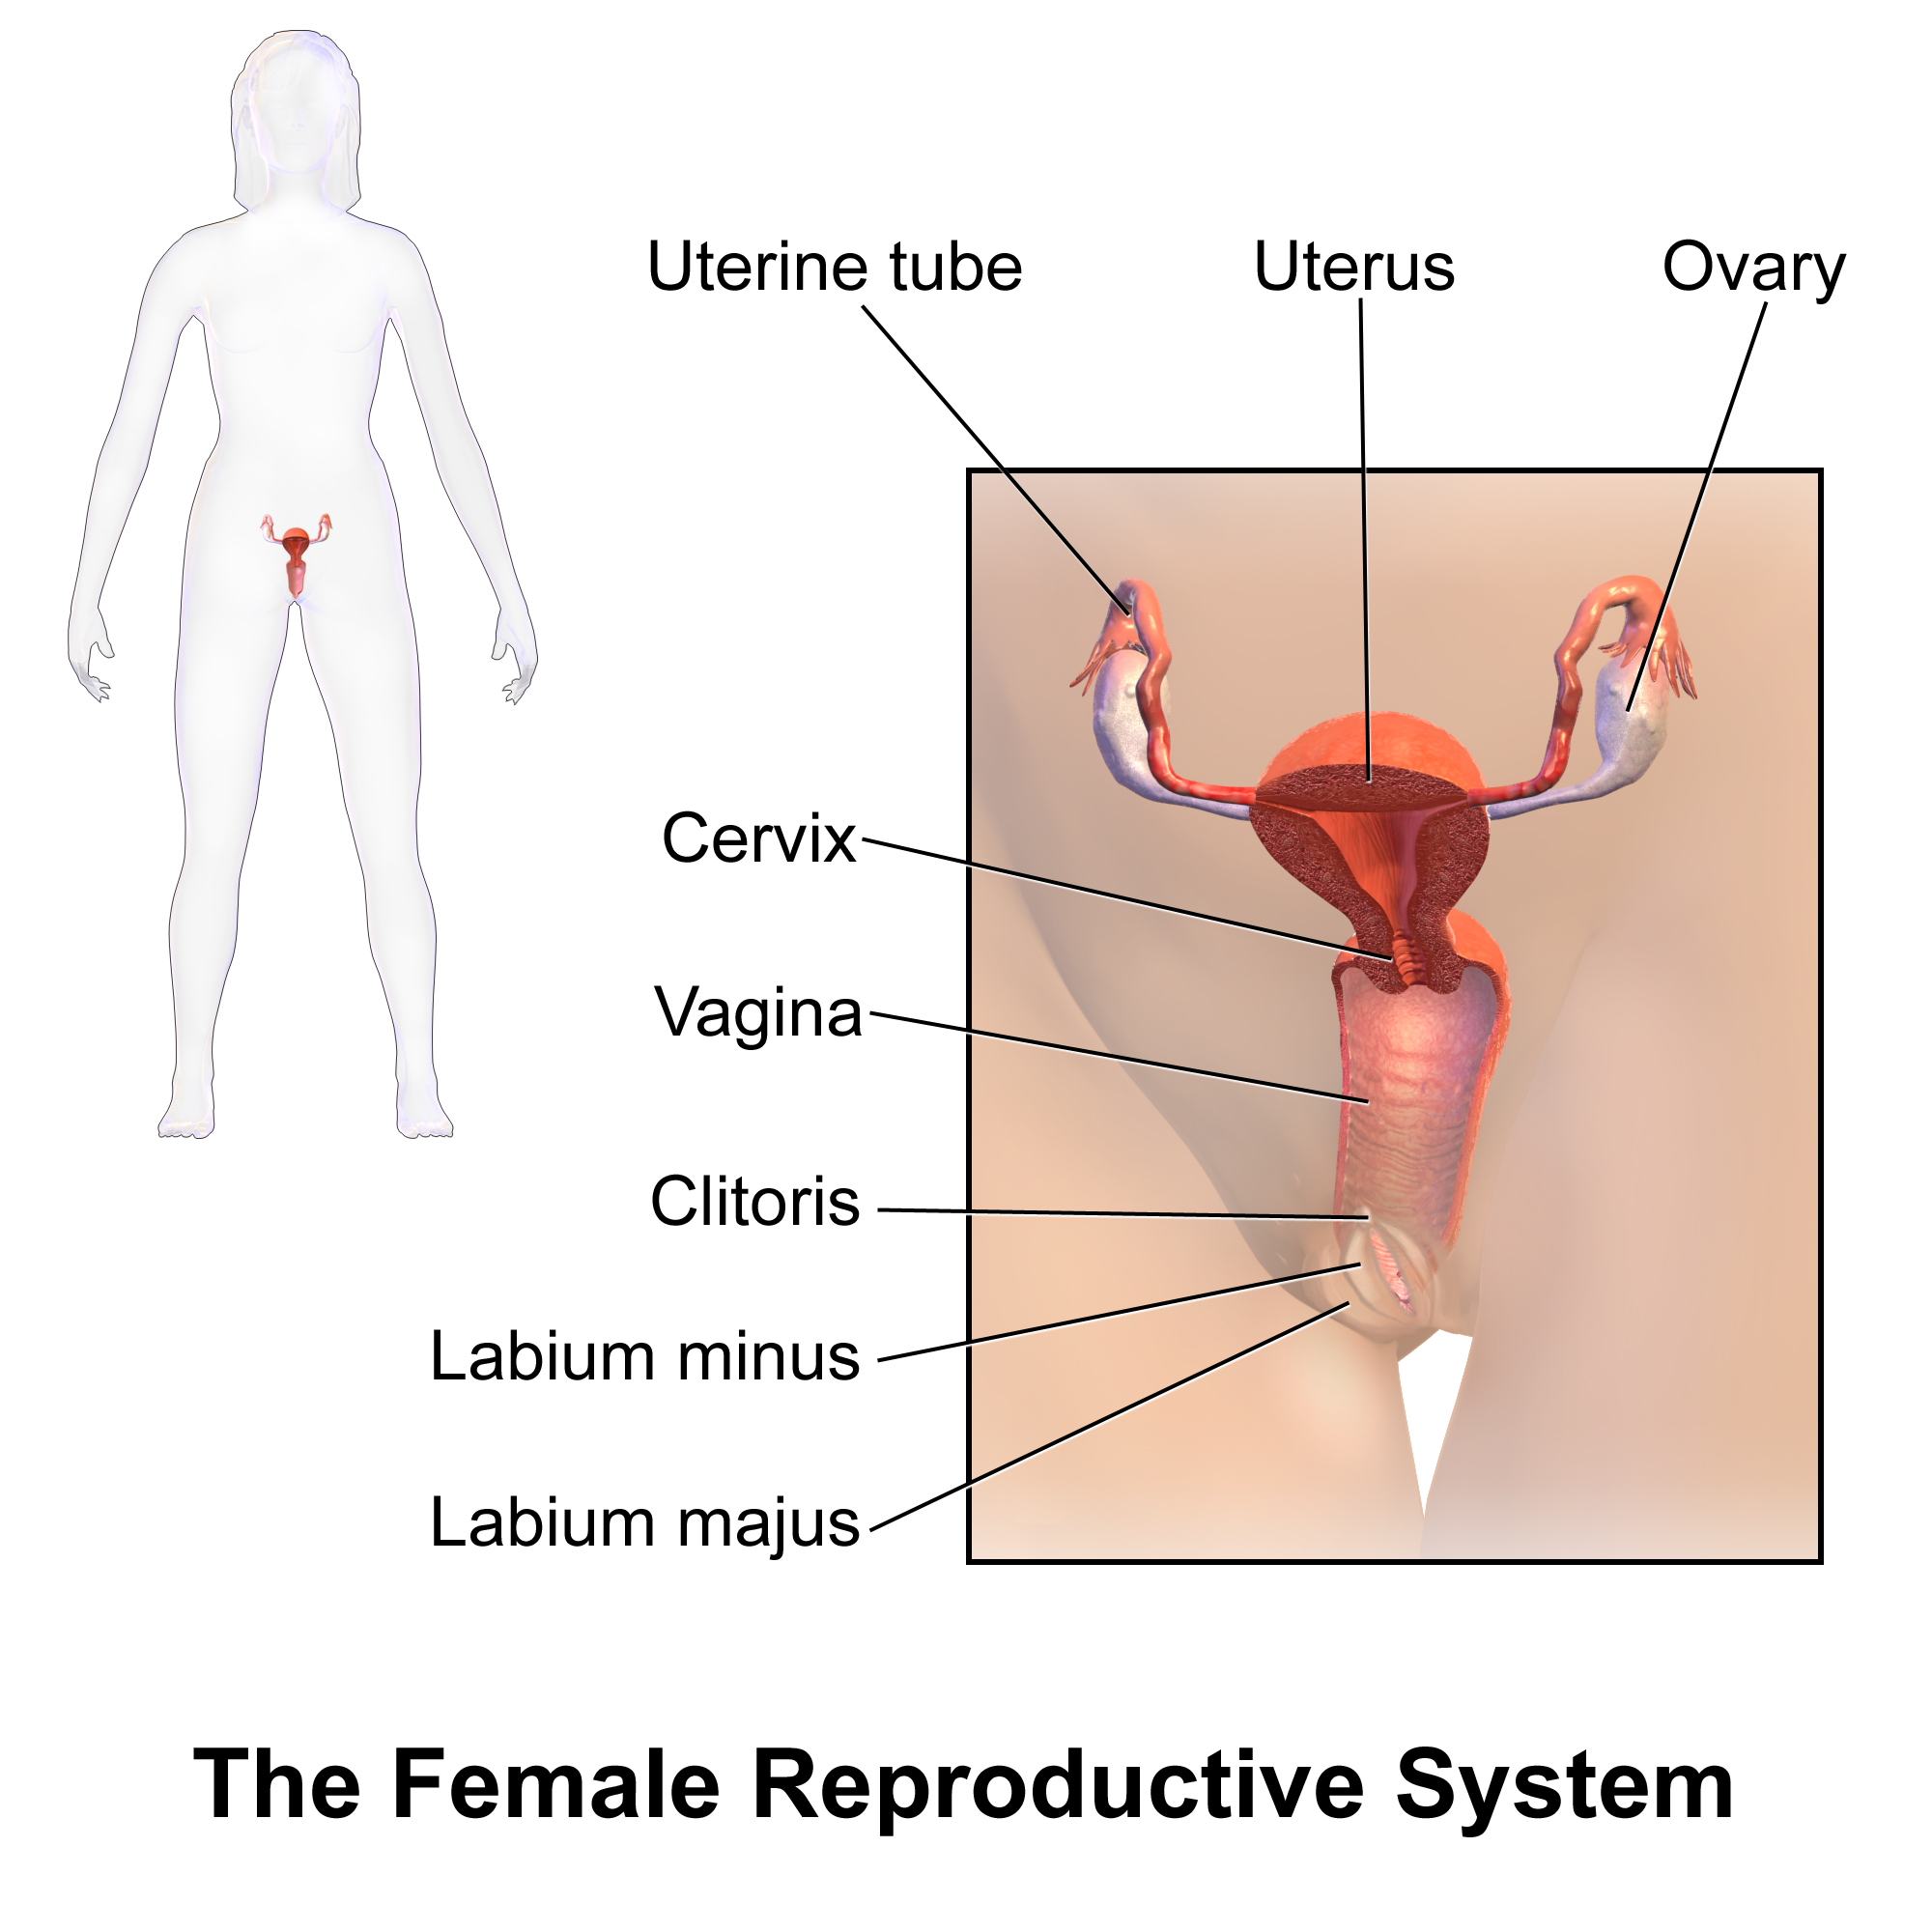 Vulva anatomy movies